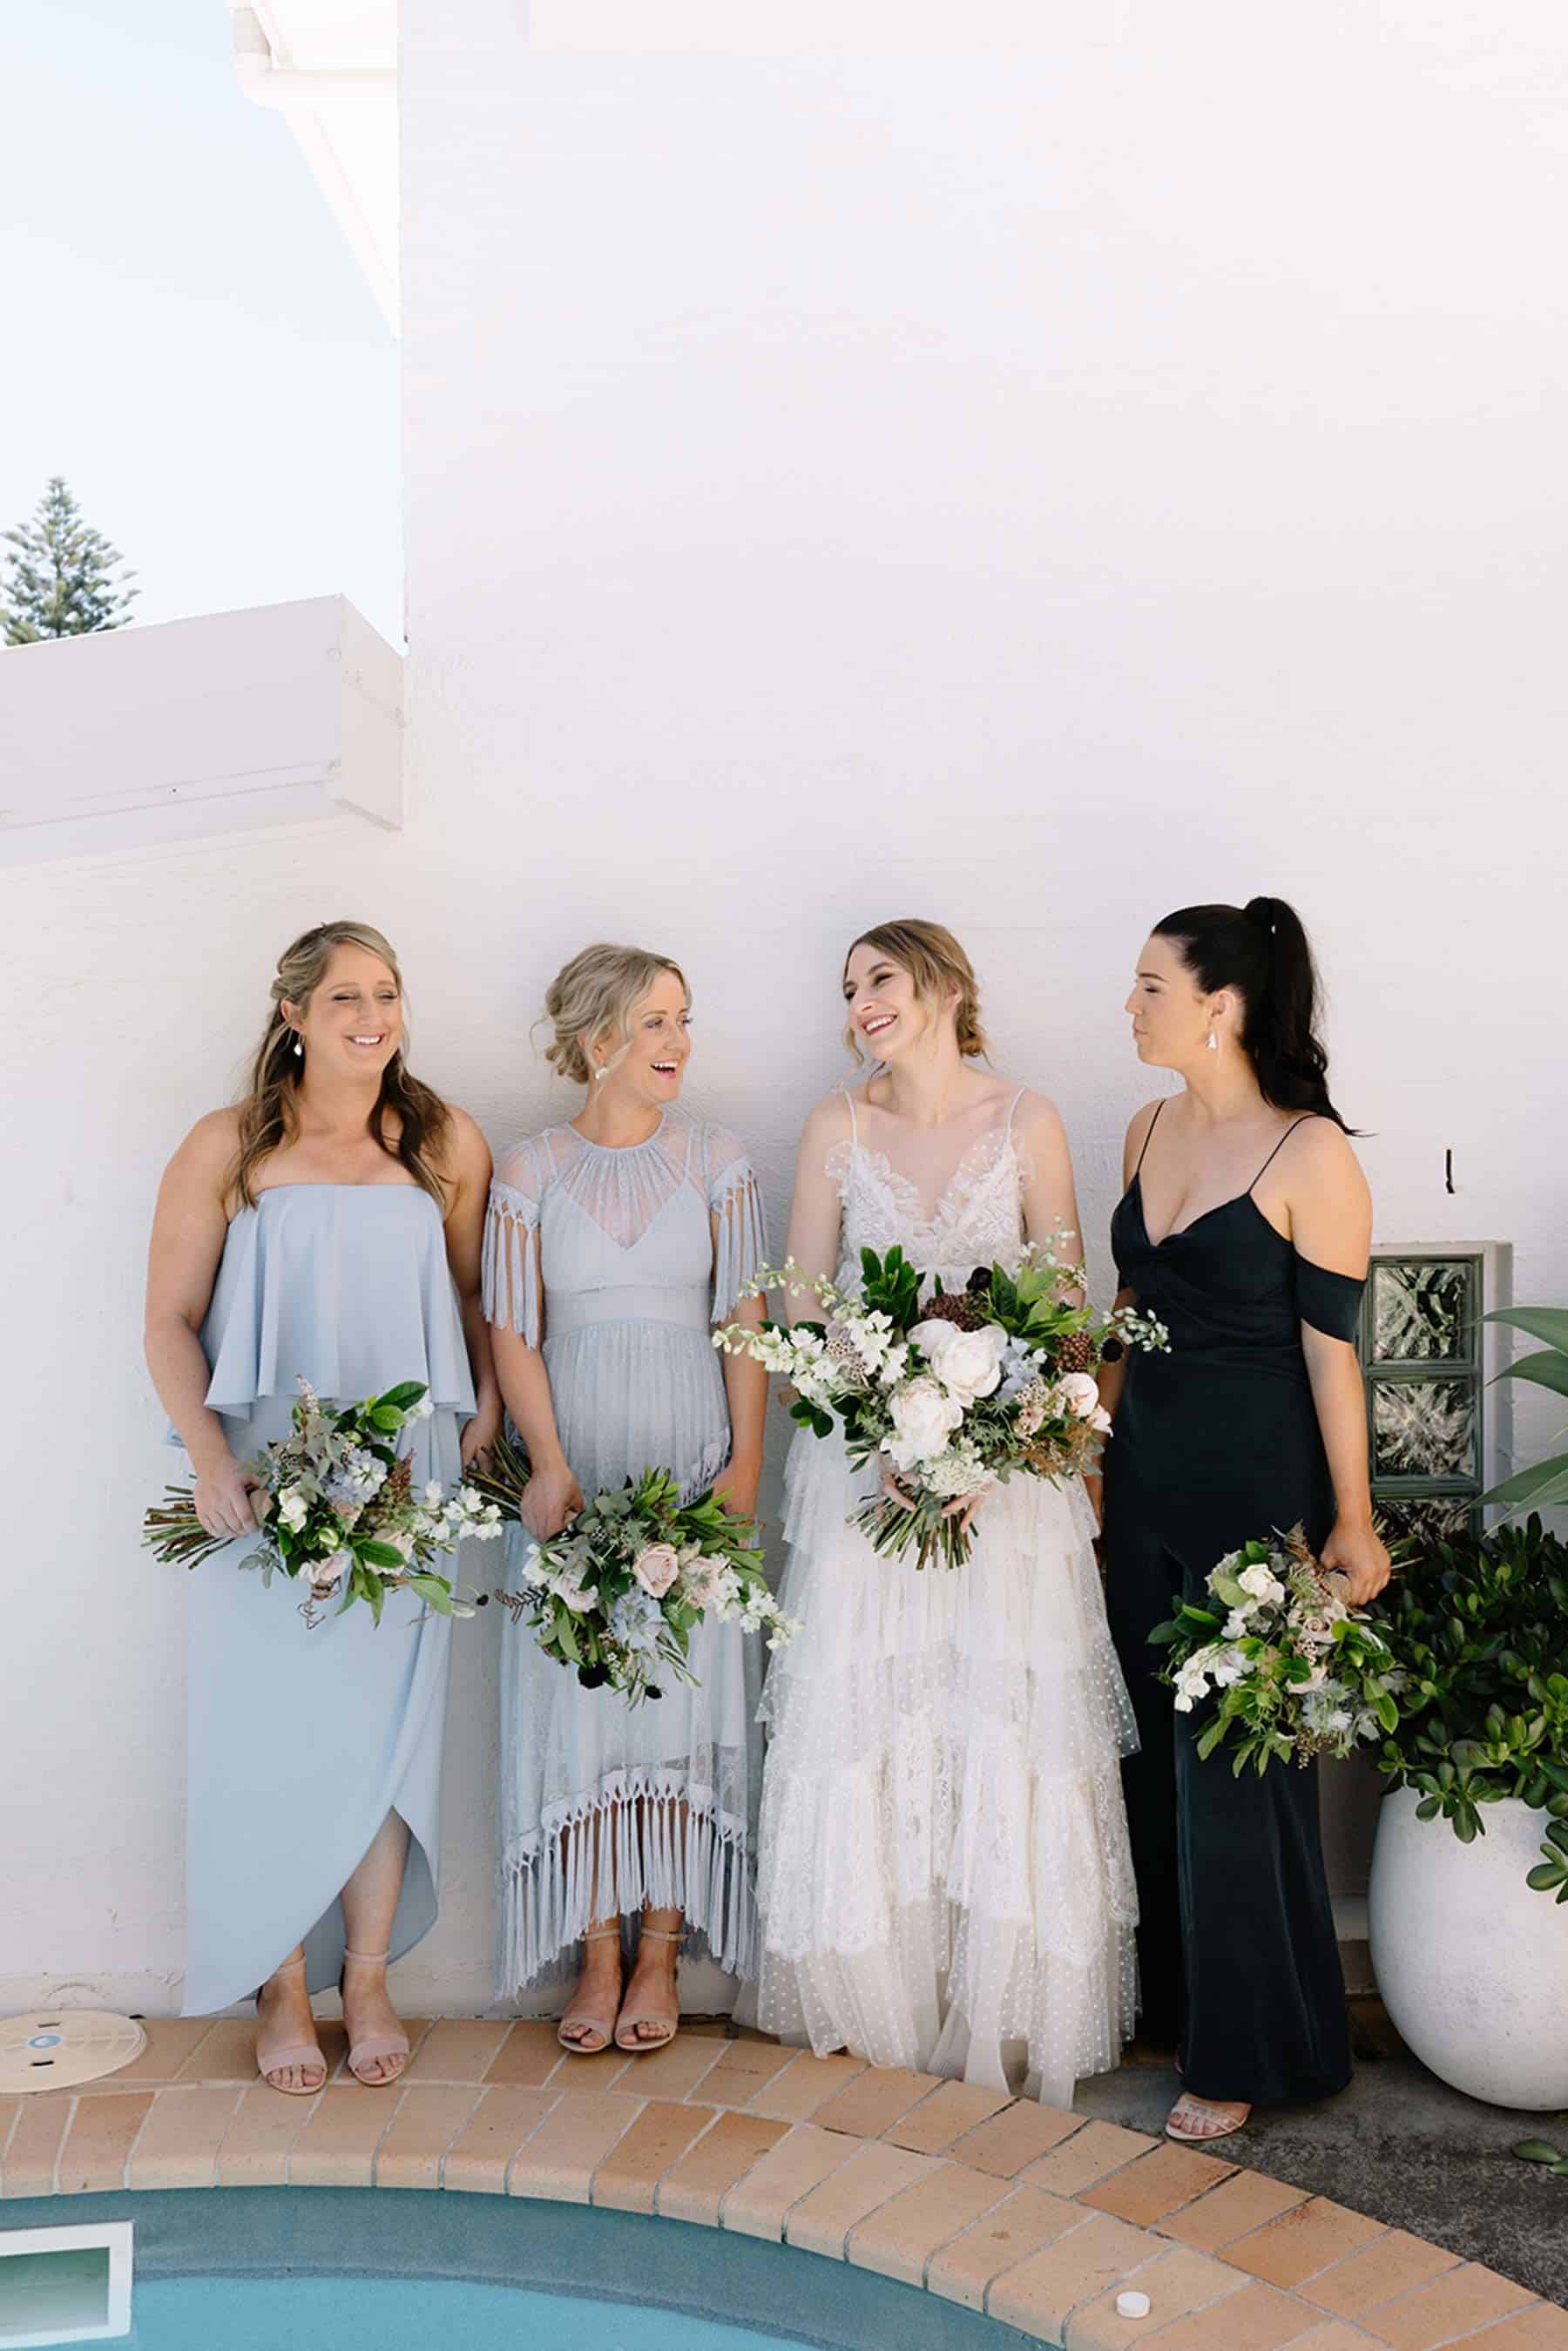 Best wedding dresses of 2019 - boho tiered lace dress by Nevenka